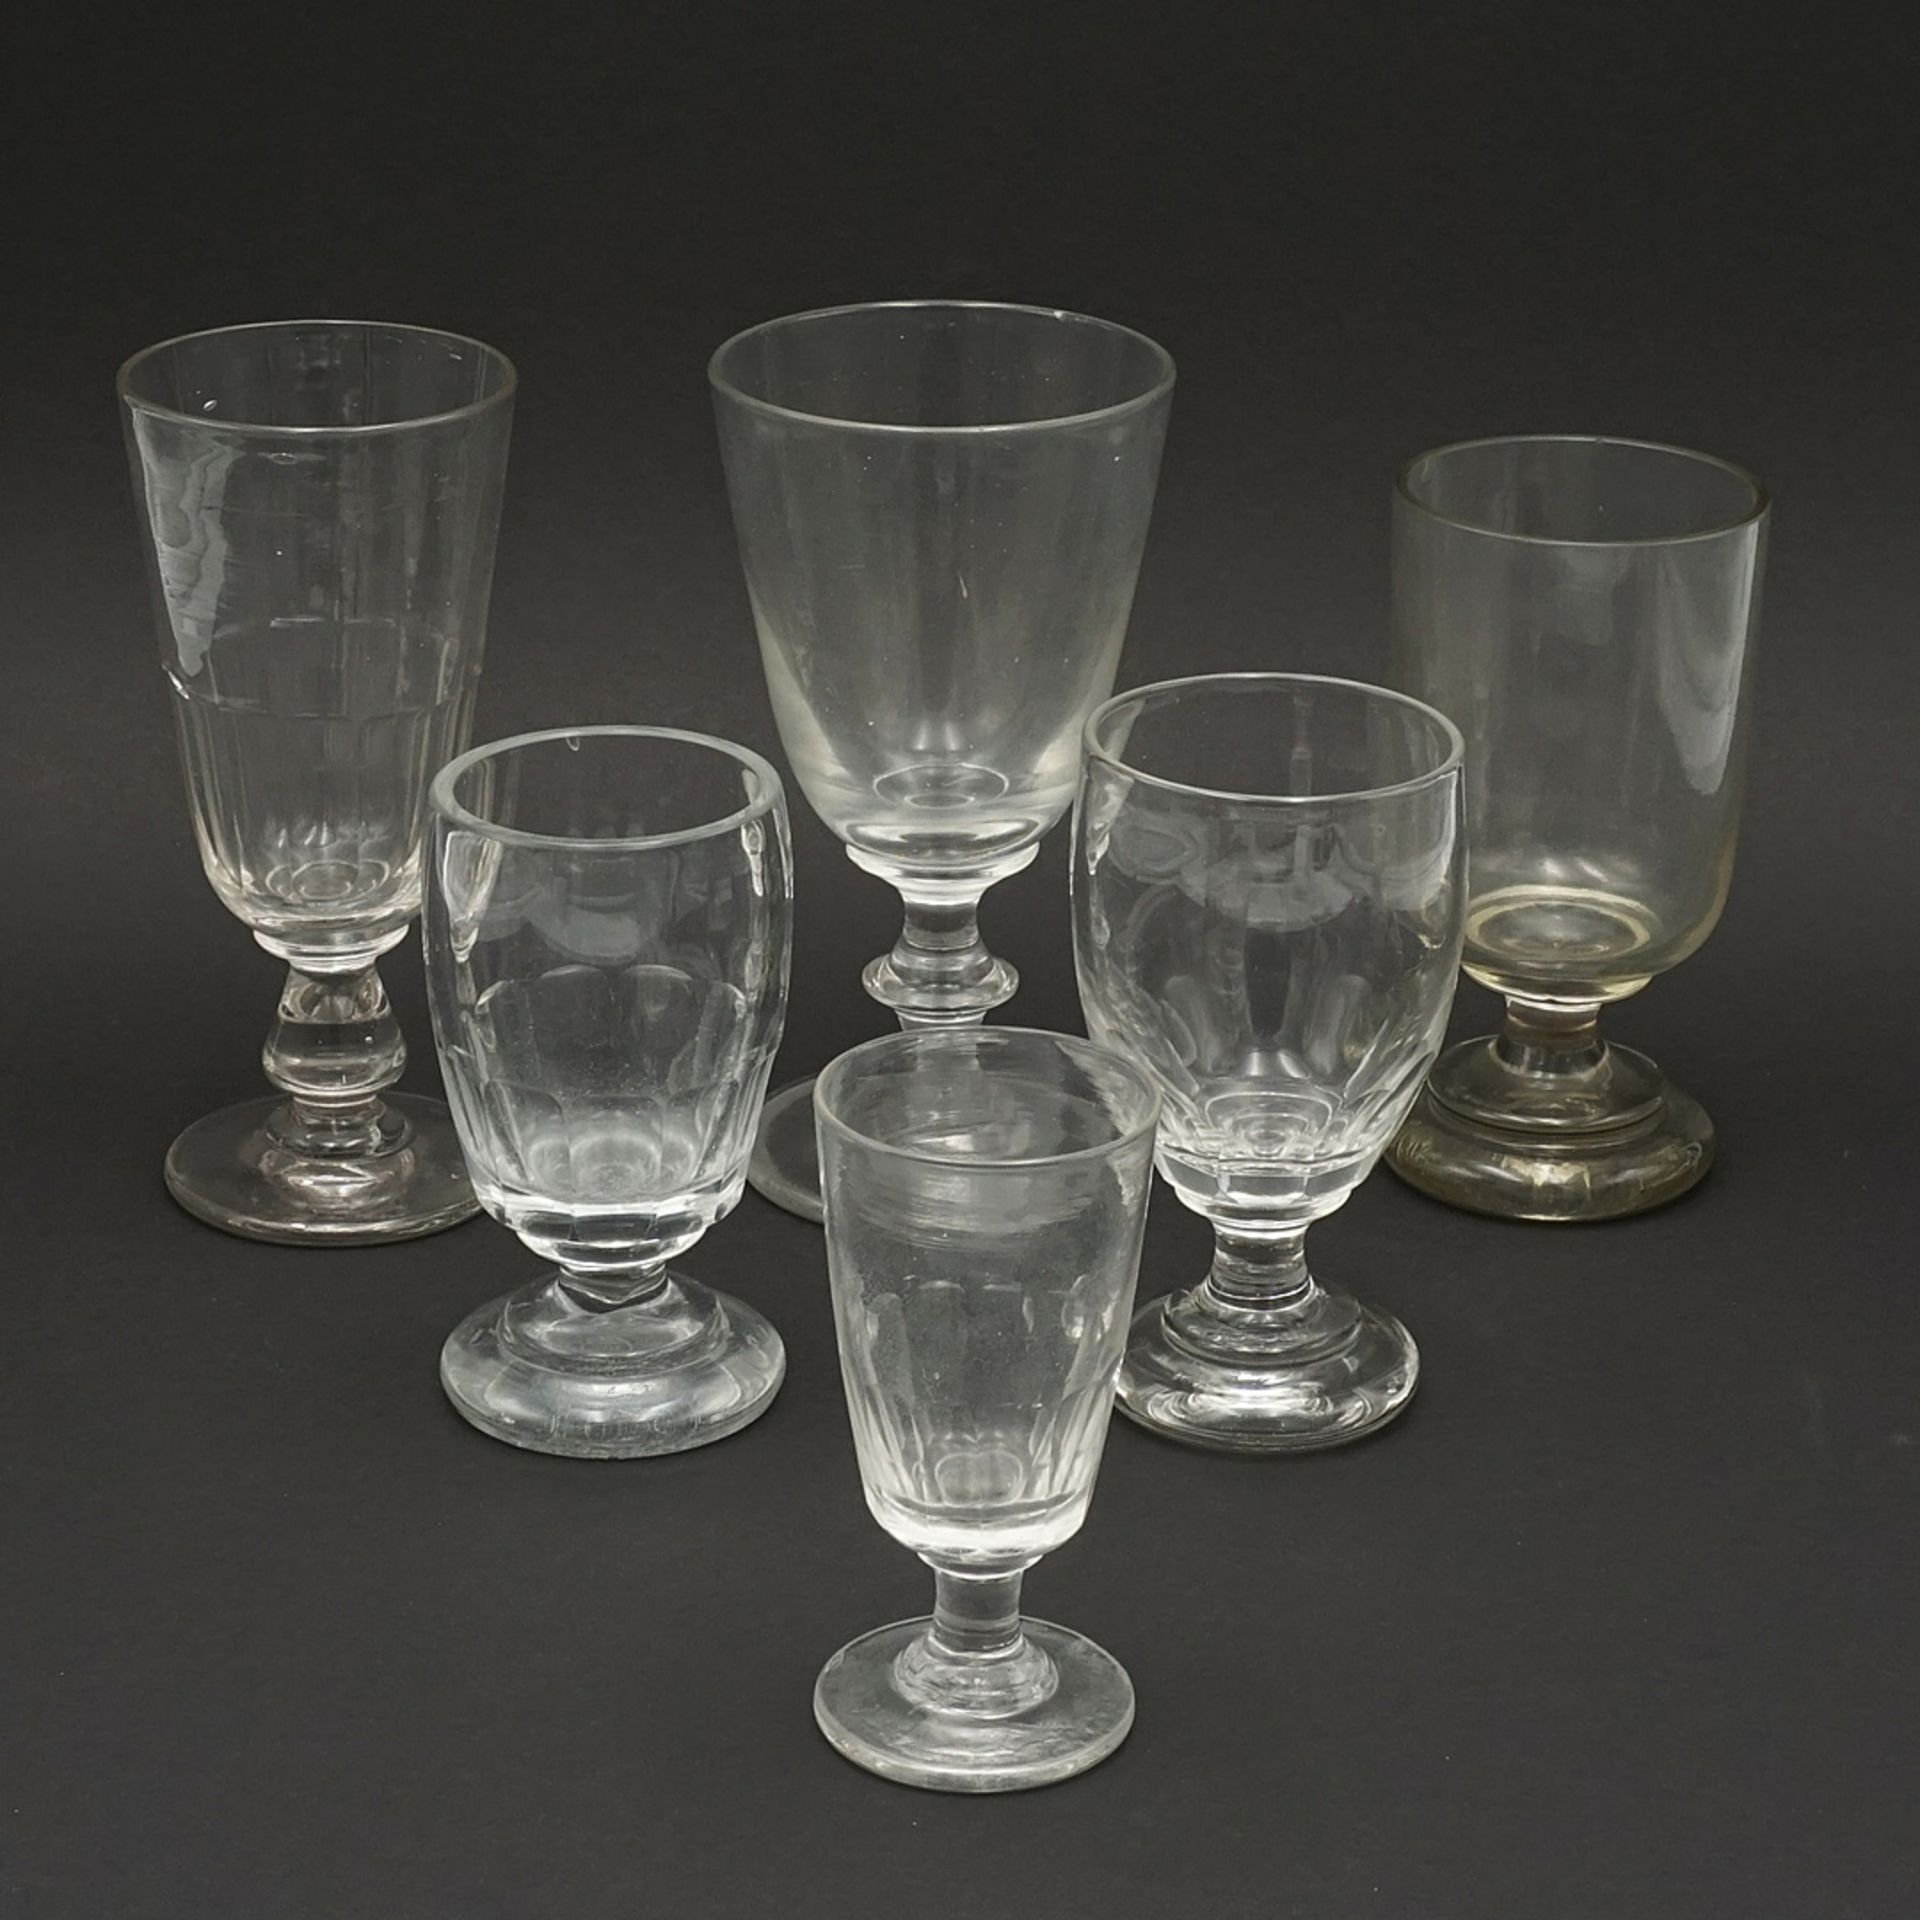 Six water glasses, 19th century